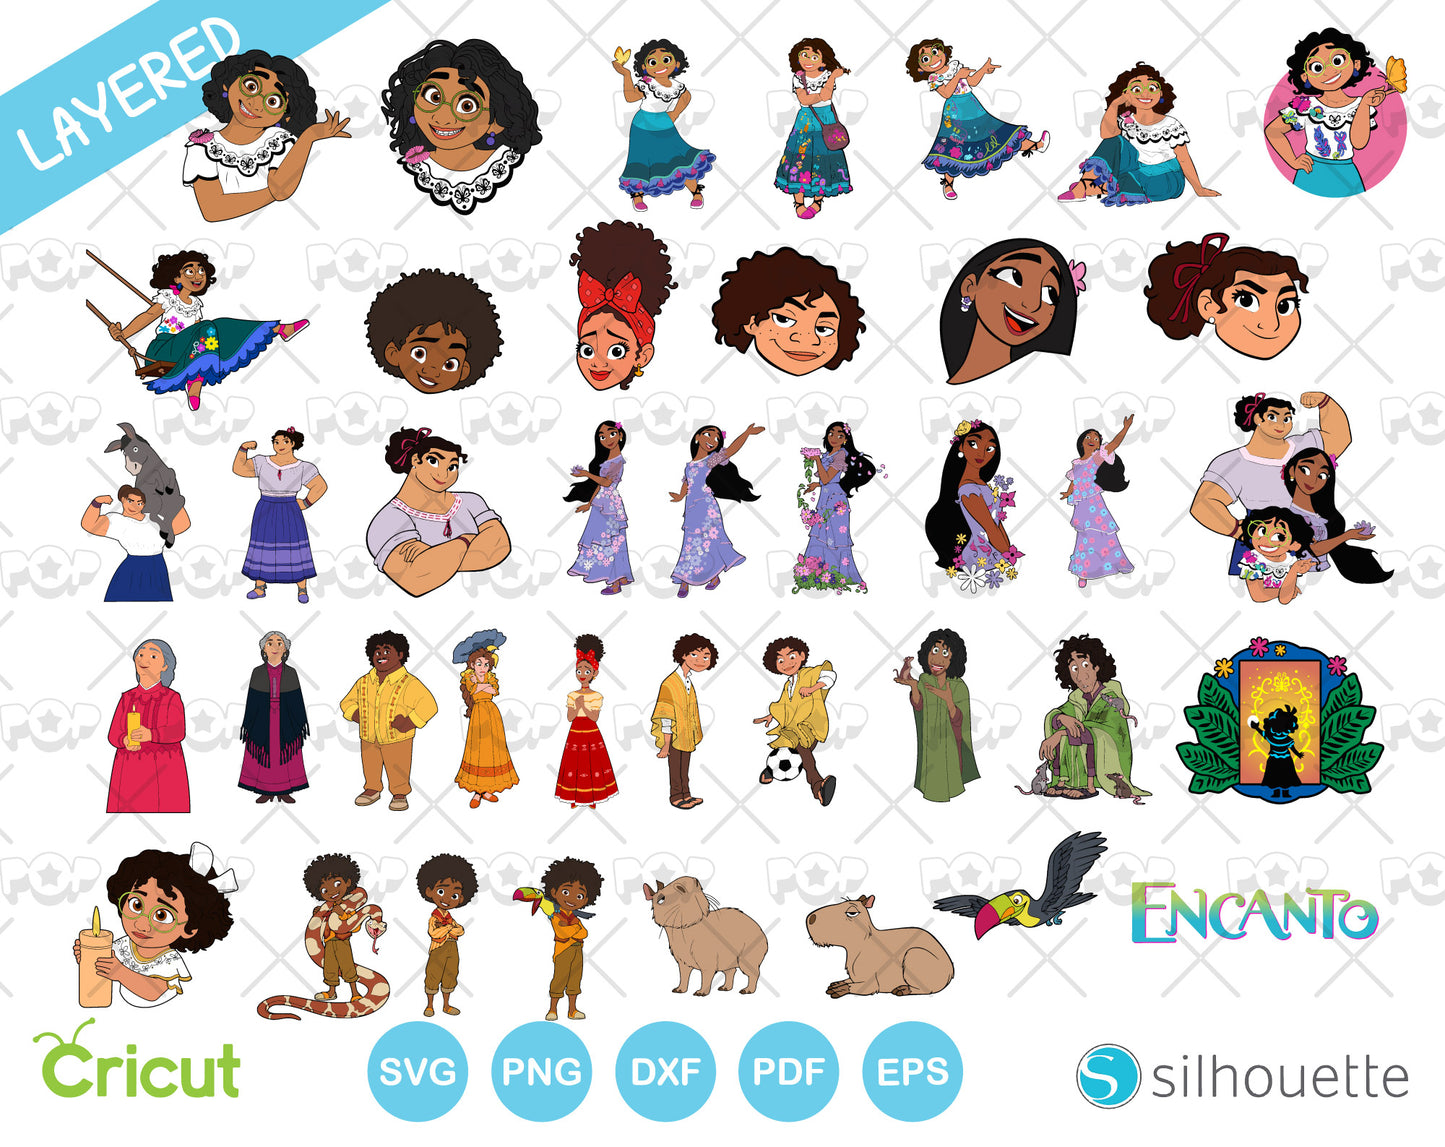 Disney Encanto 80 cliparts bundle, SVG cutting files for cricut silhouette, SVG, PNG, DXF, instant download